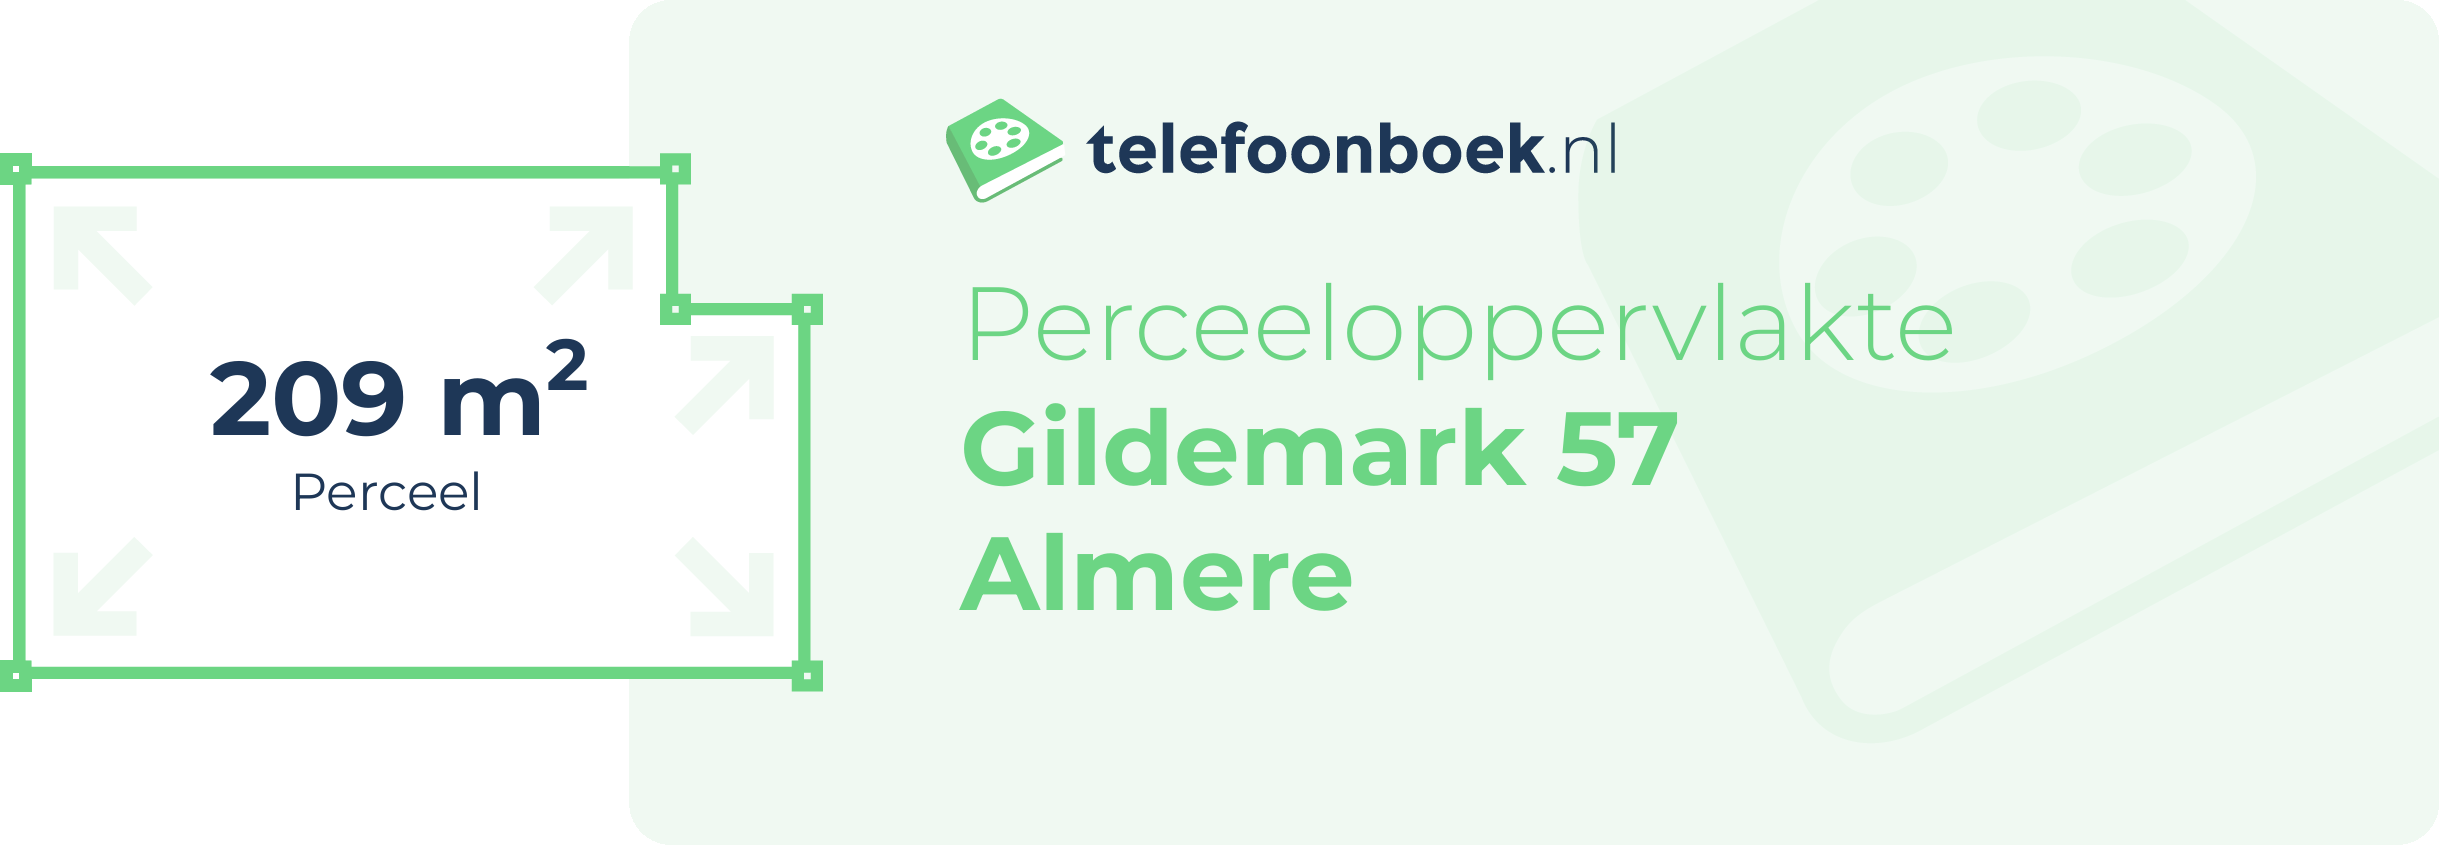 Perceeloppervlakte Gildemark 57 Almere